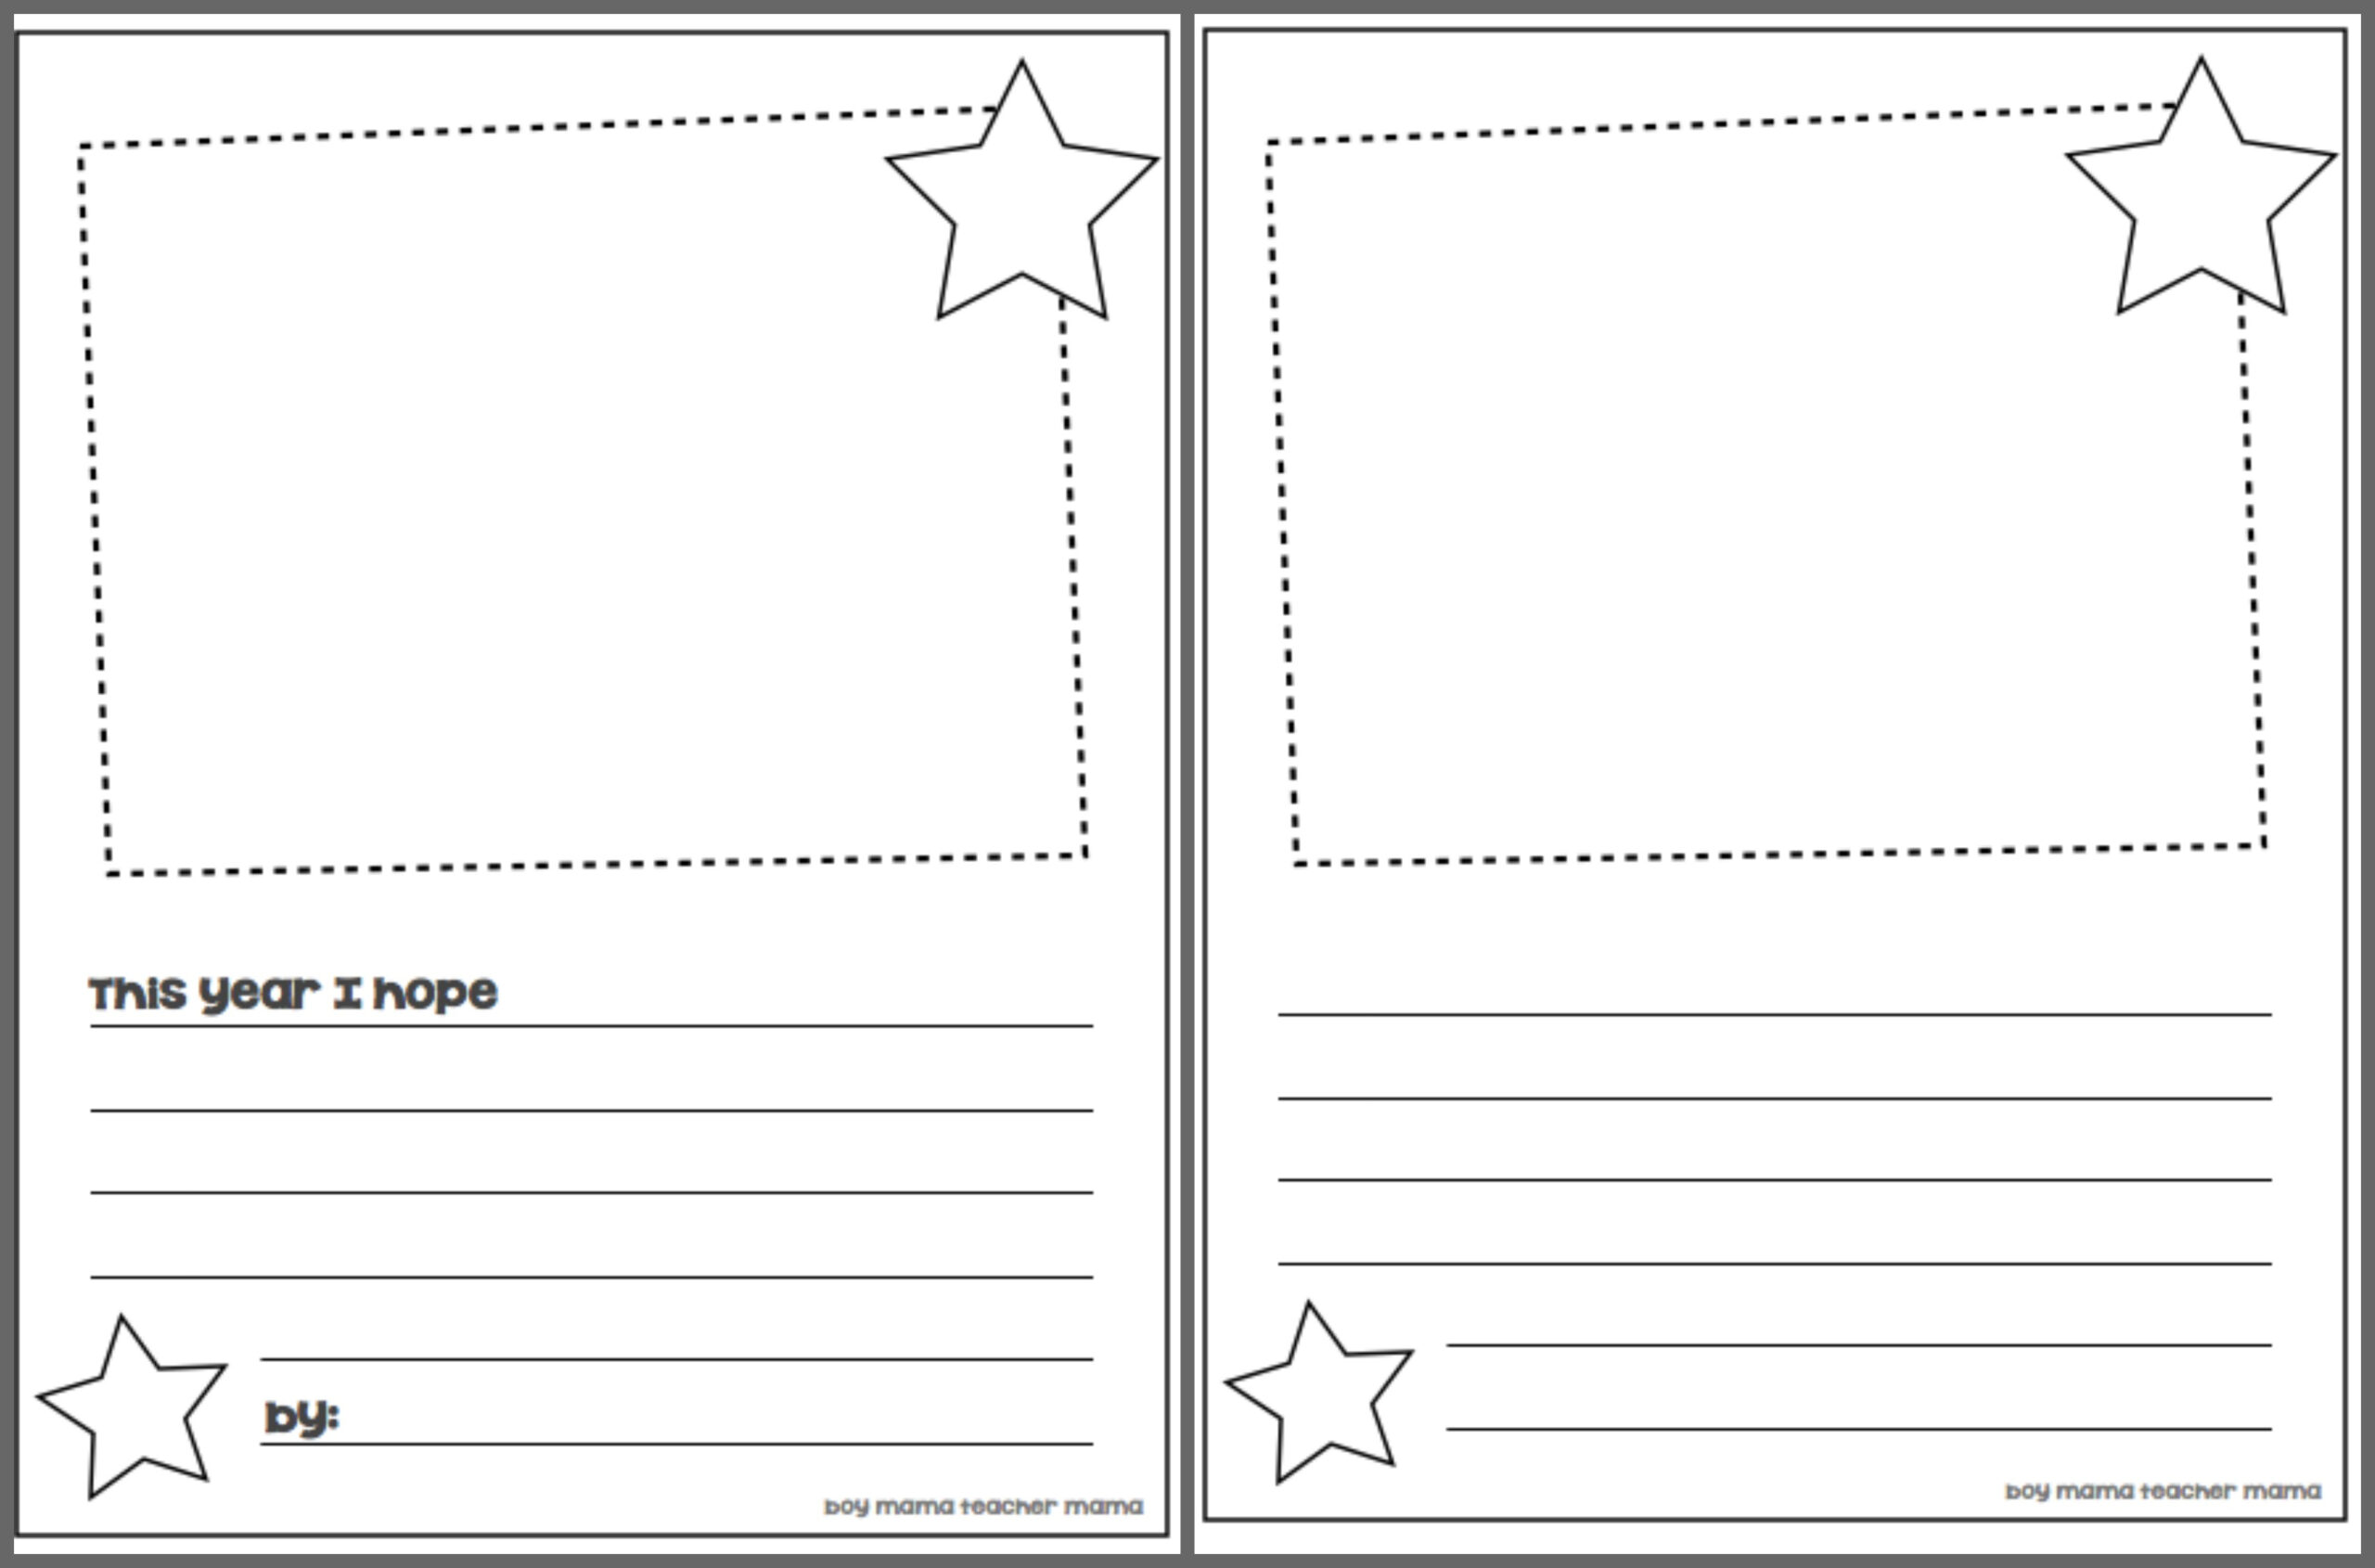 4 Stylish Goal Setting Worksheets To Print Pdf Hopes And Dreams 